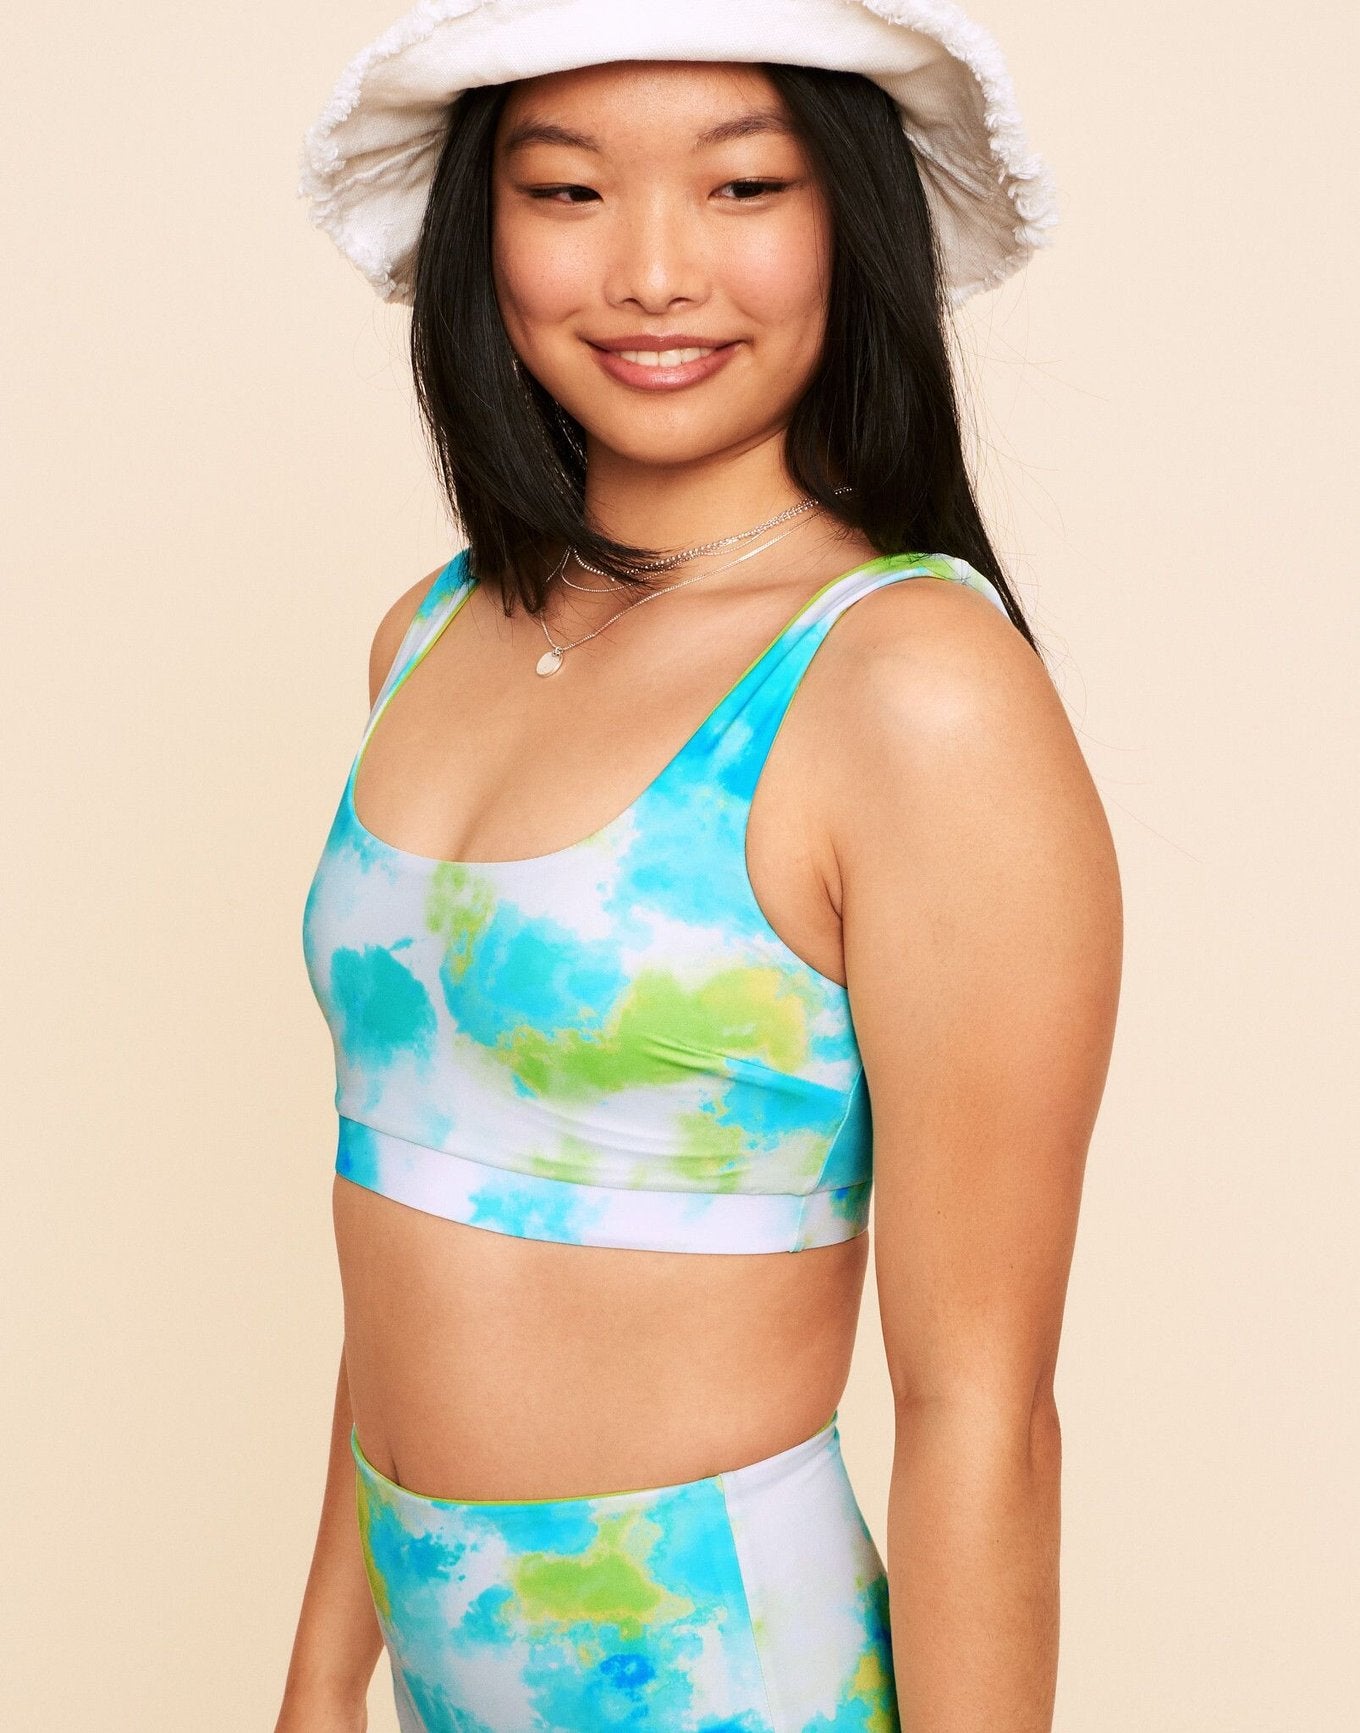 Earth Republic Rivka Reversible Square Necktop Reversible Swim Top in color PR171261 - Opt01 and shape bikini